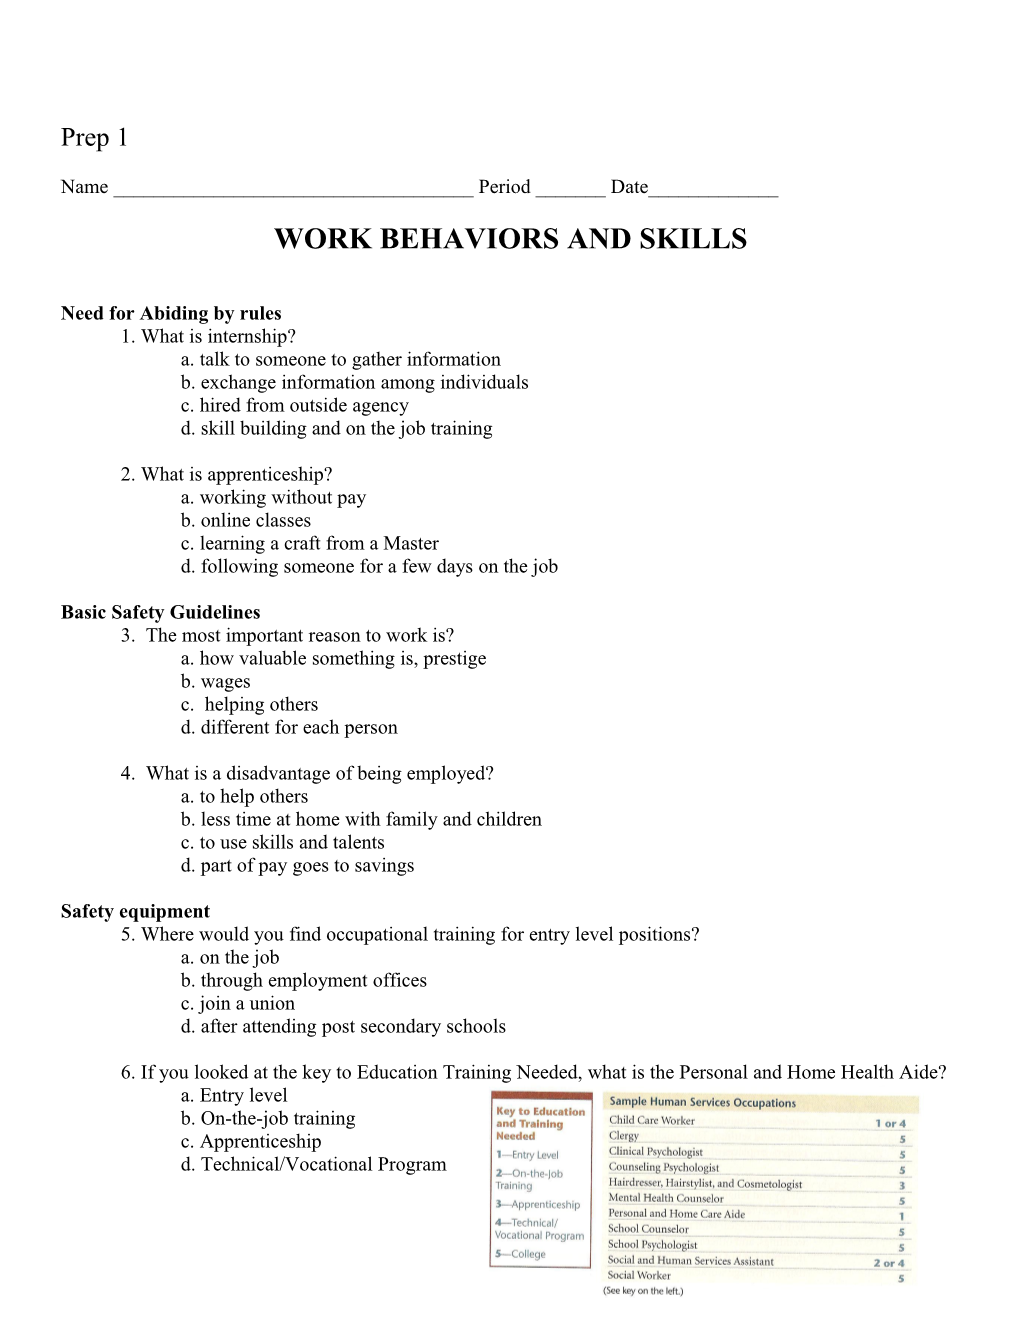 Work Behaviors and Skills